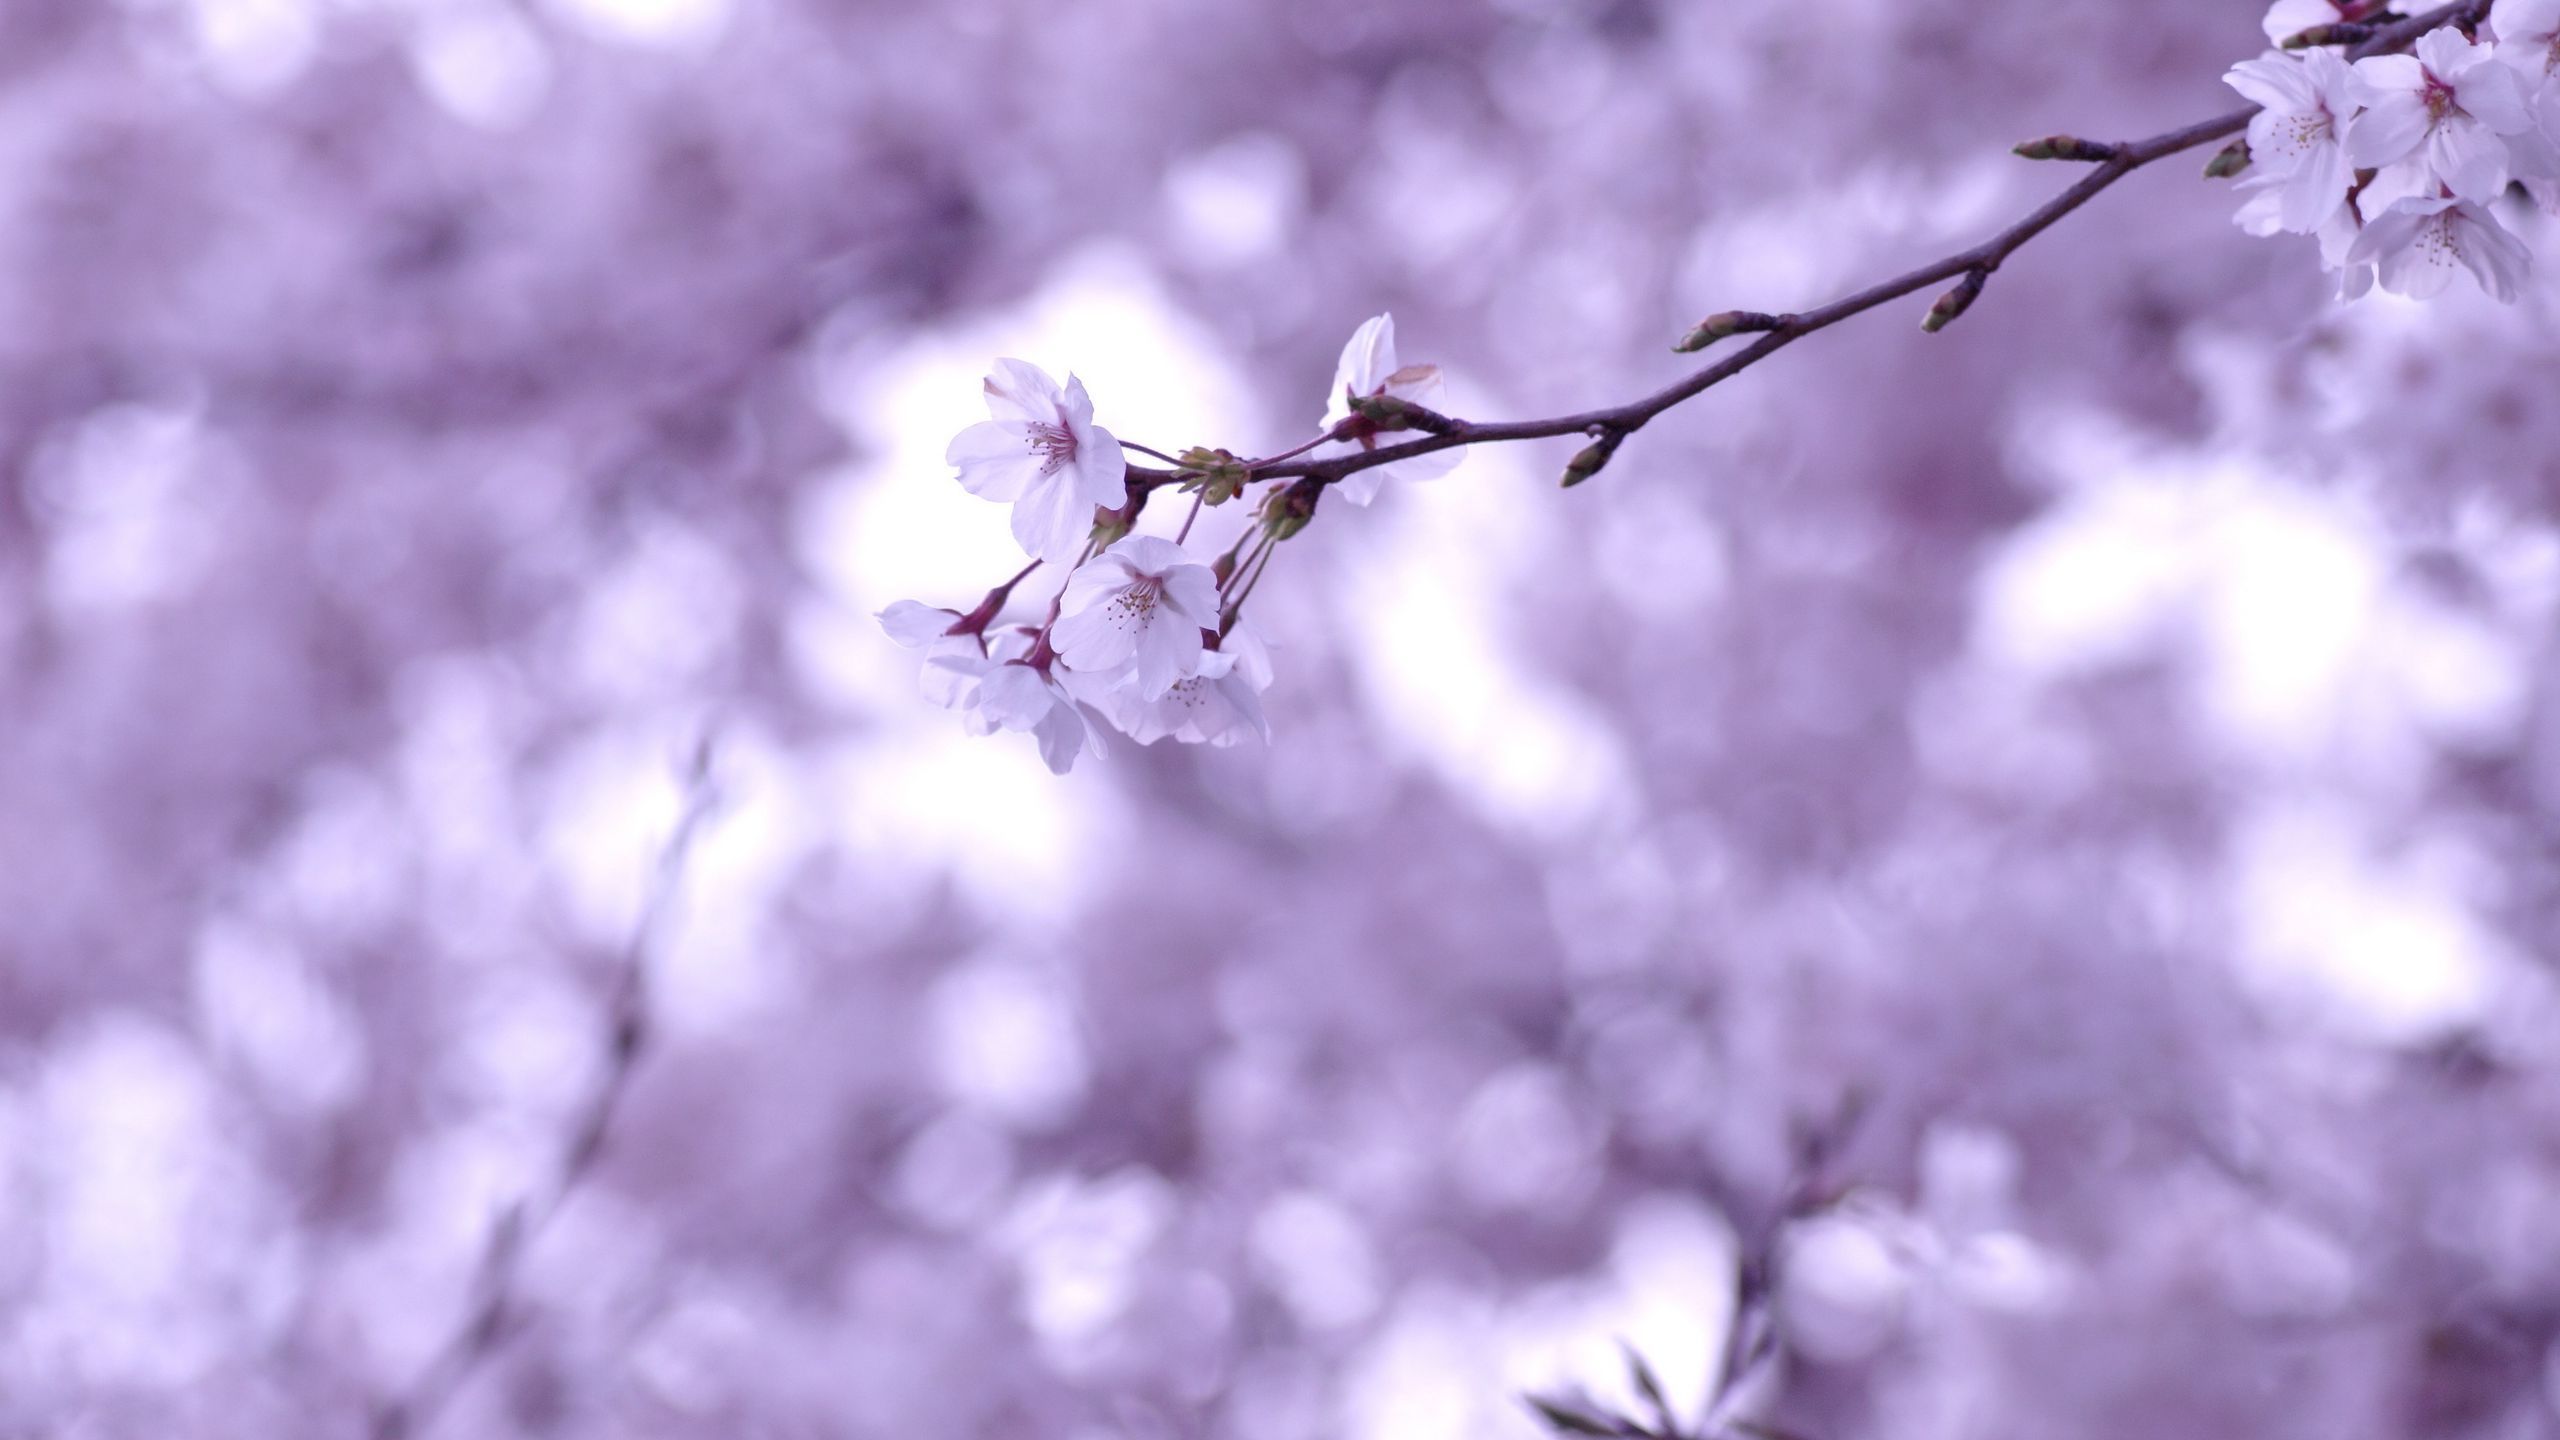 Download wallpaper 2560x1440 cherry, twig, sakura, branches widescreen 16:9 HD background